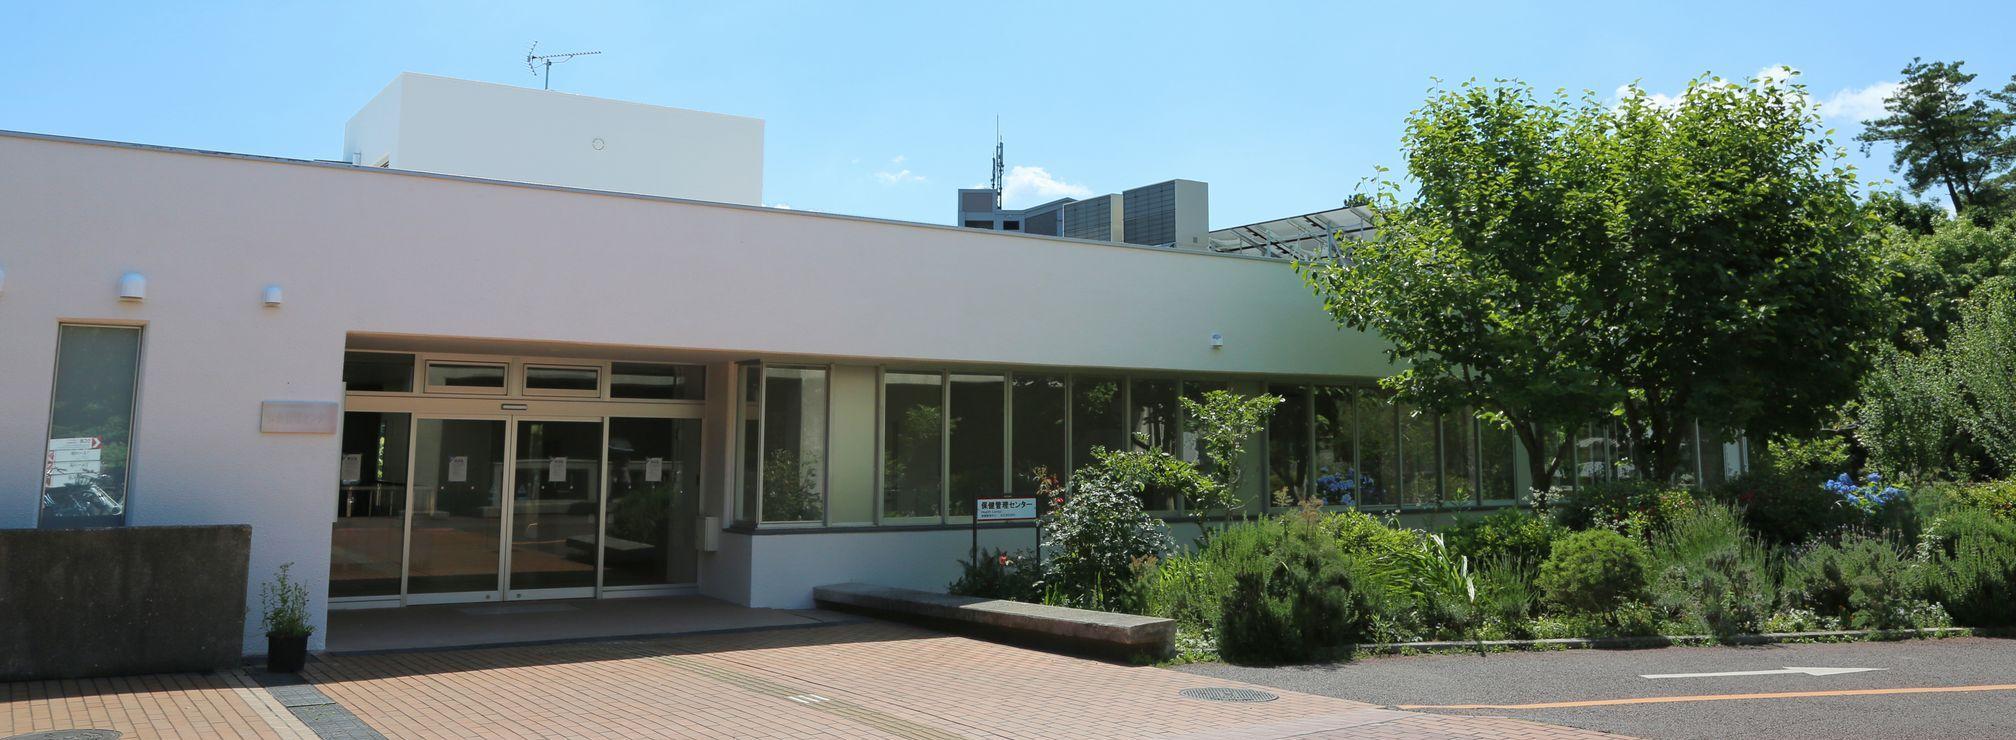 University Health Center